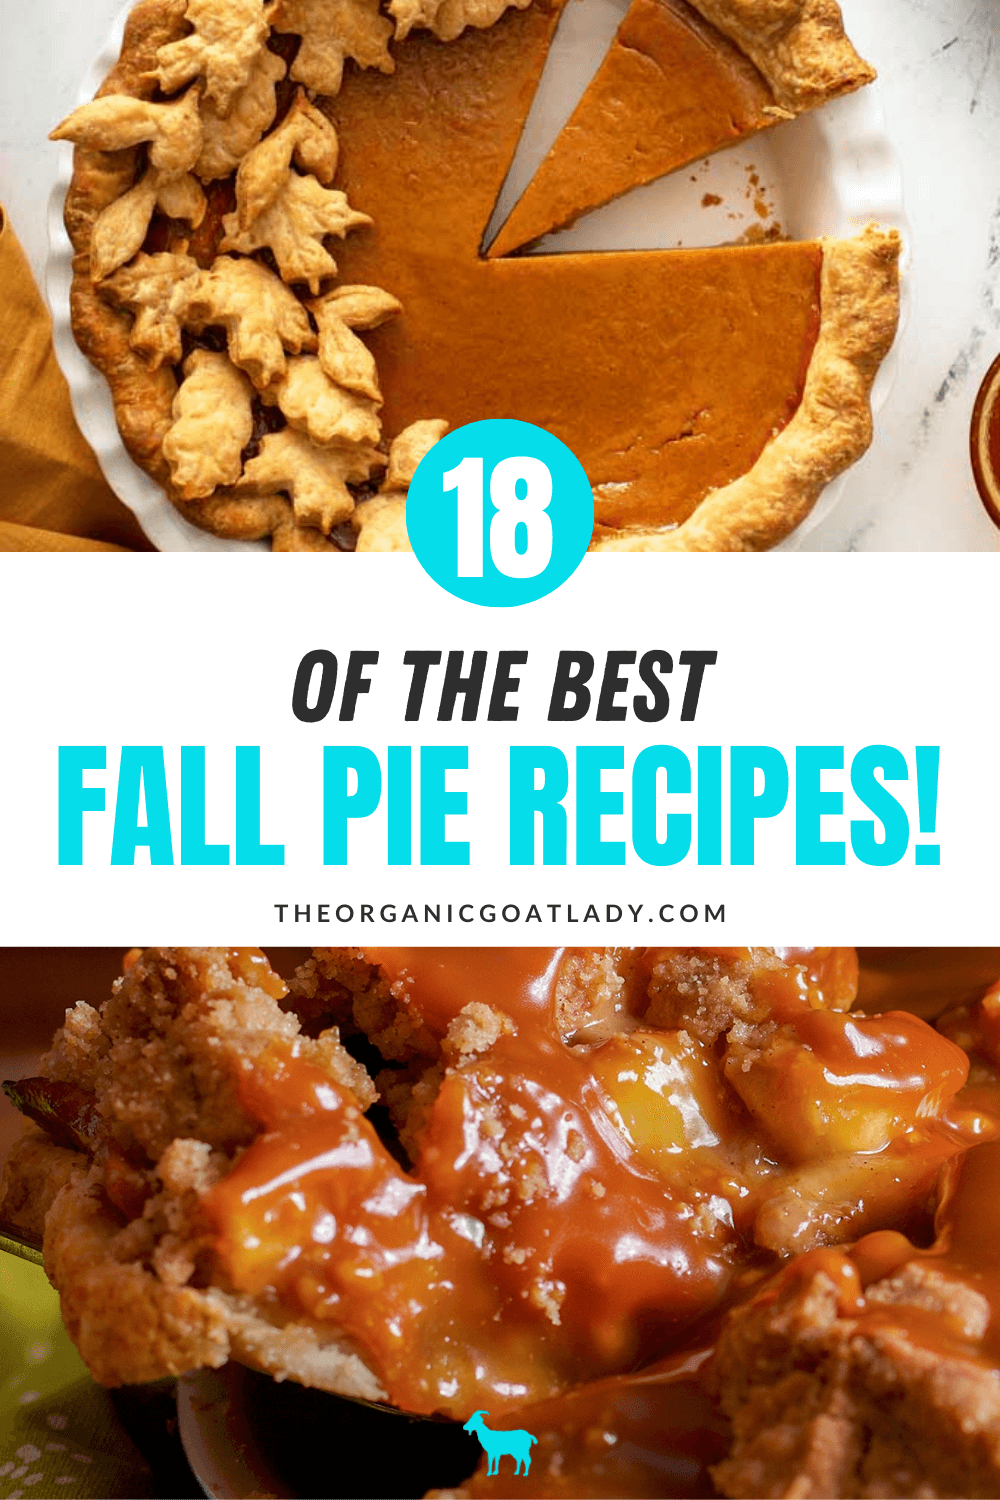 Fall Pie Recipes